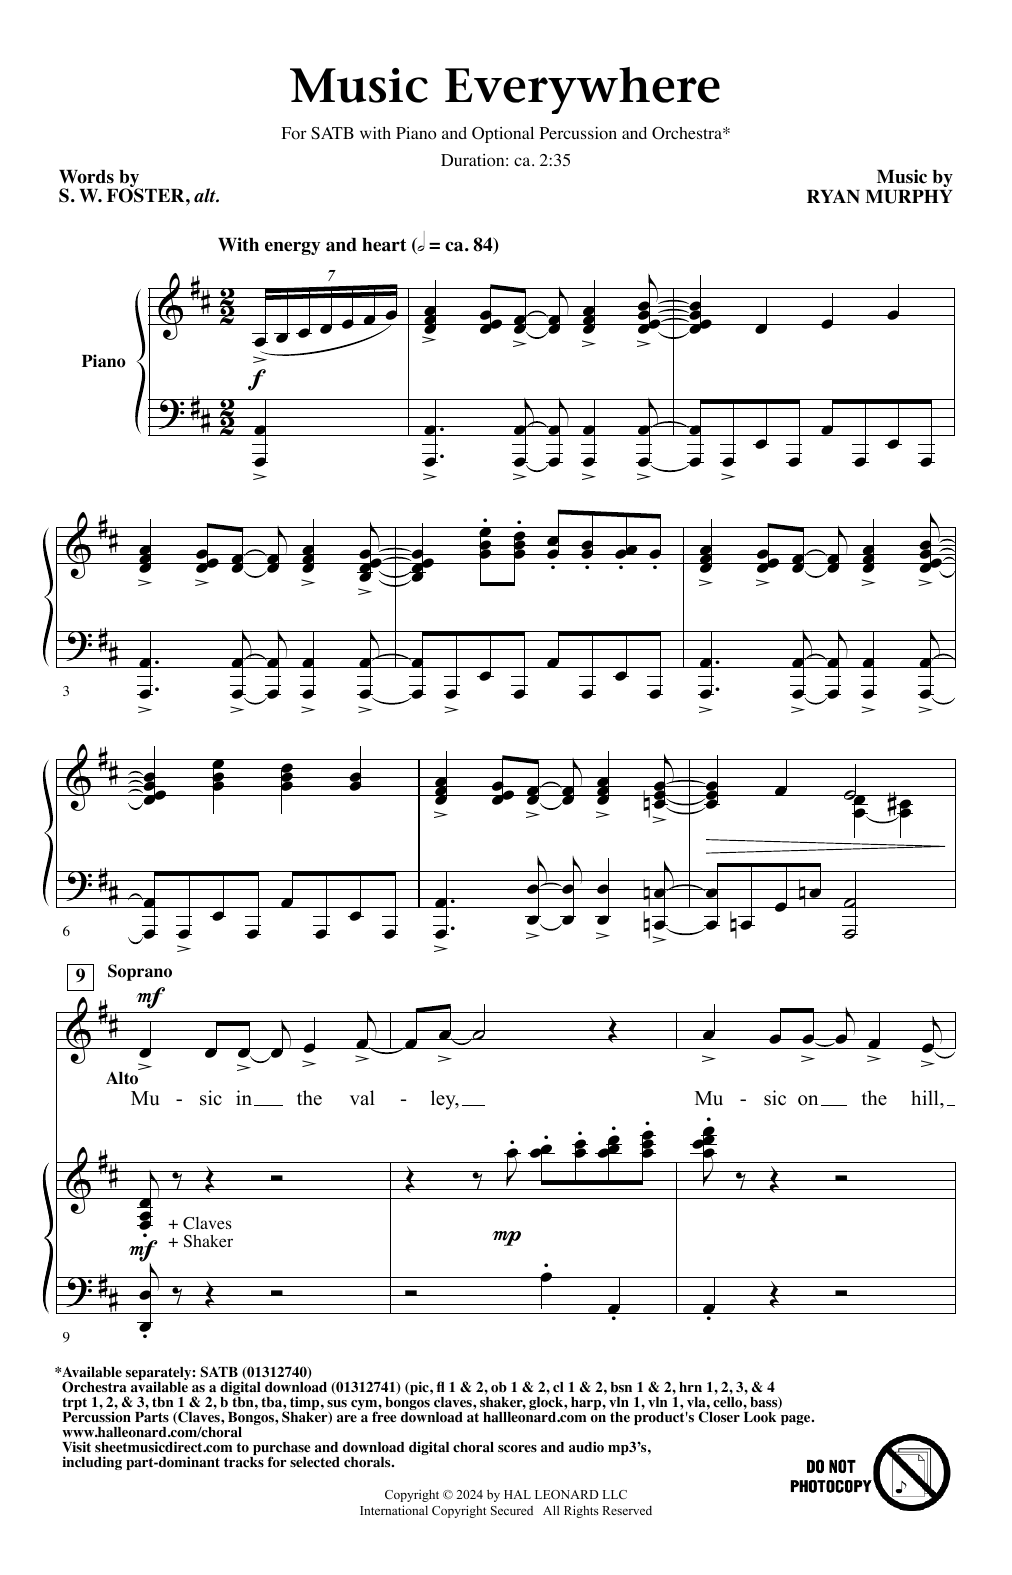 Ryan Murphy Music Everywhere sheet music notes and chords arranged for SATB Choir